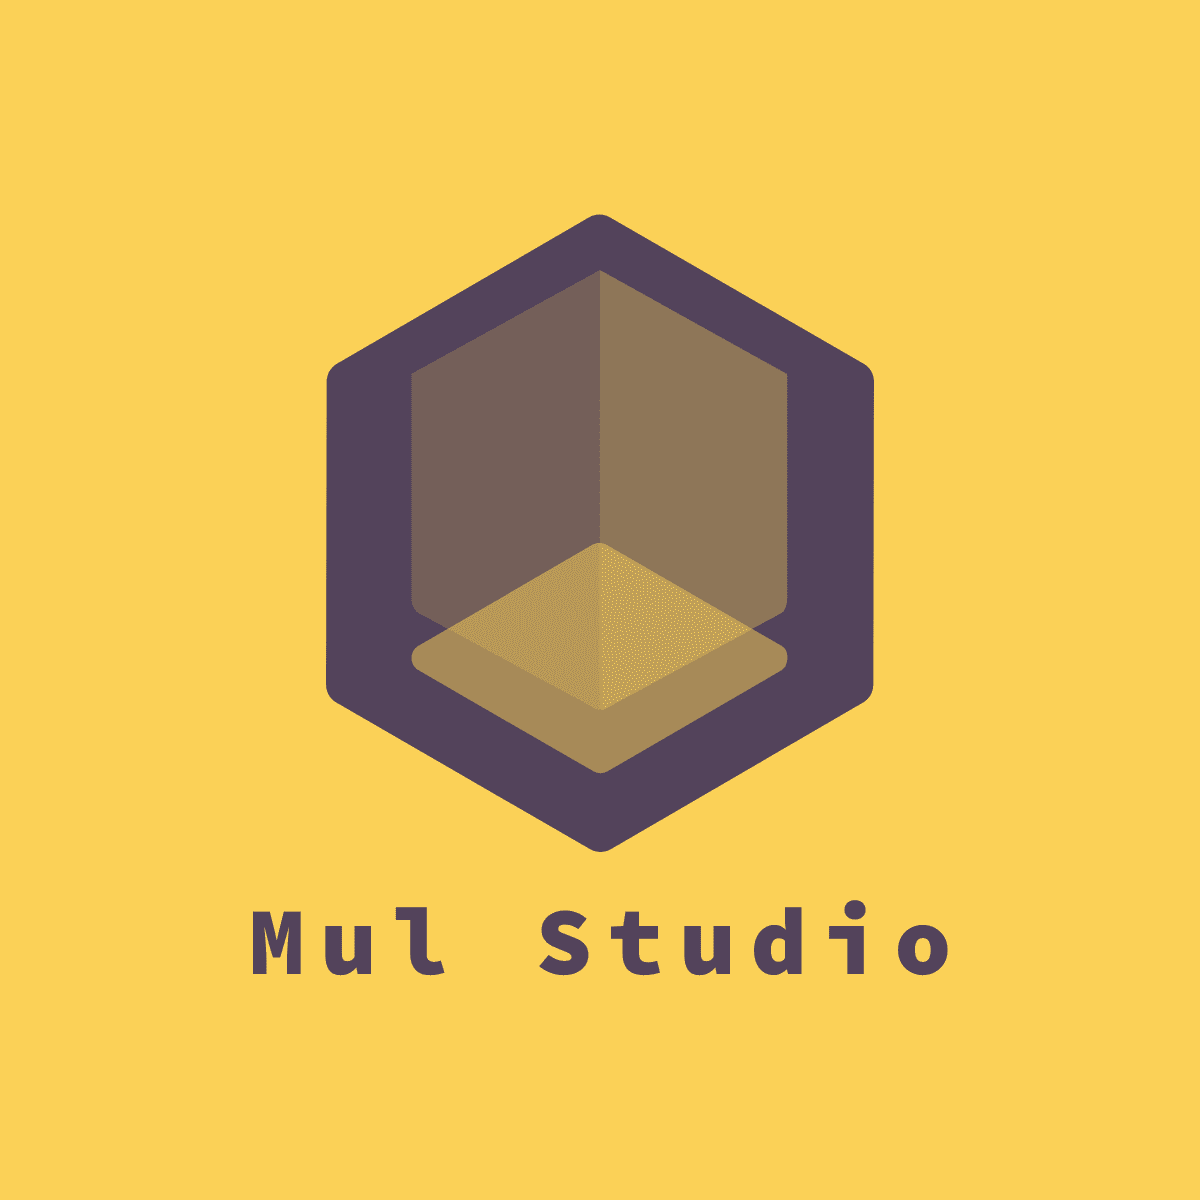 MUL 스튜디오